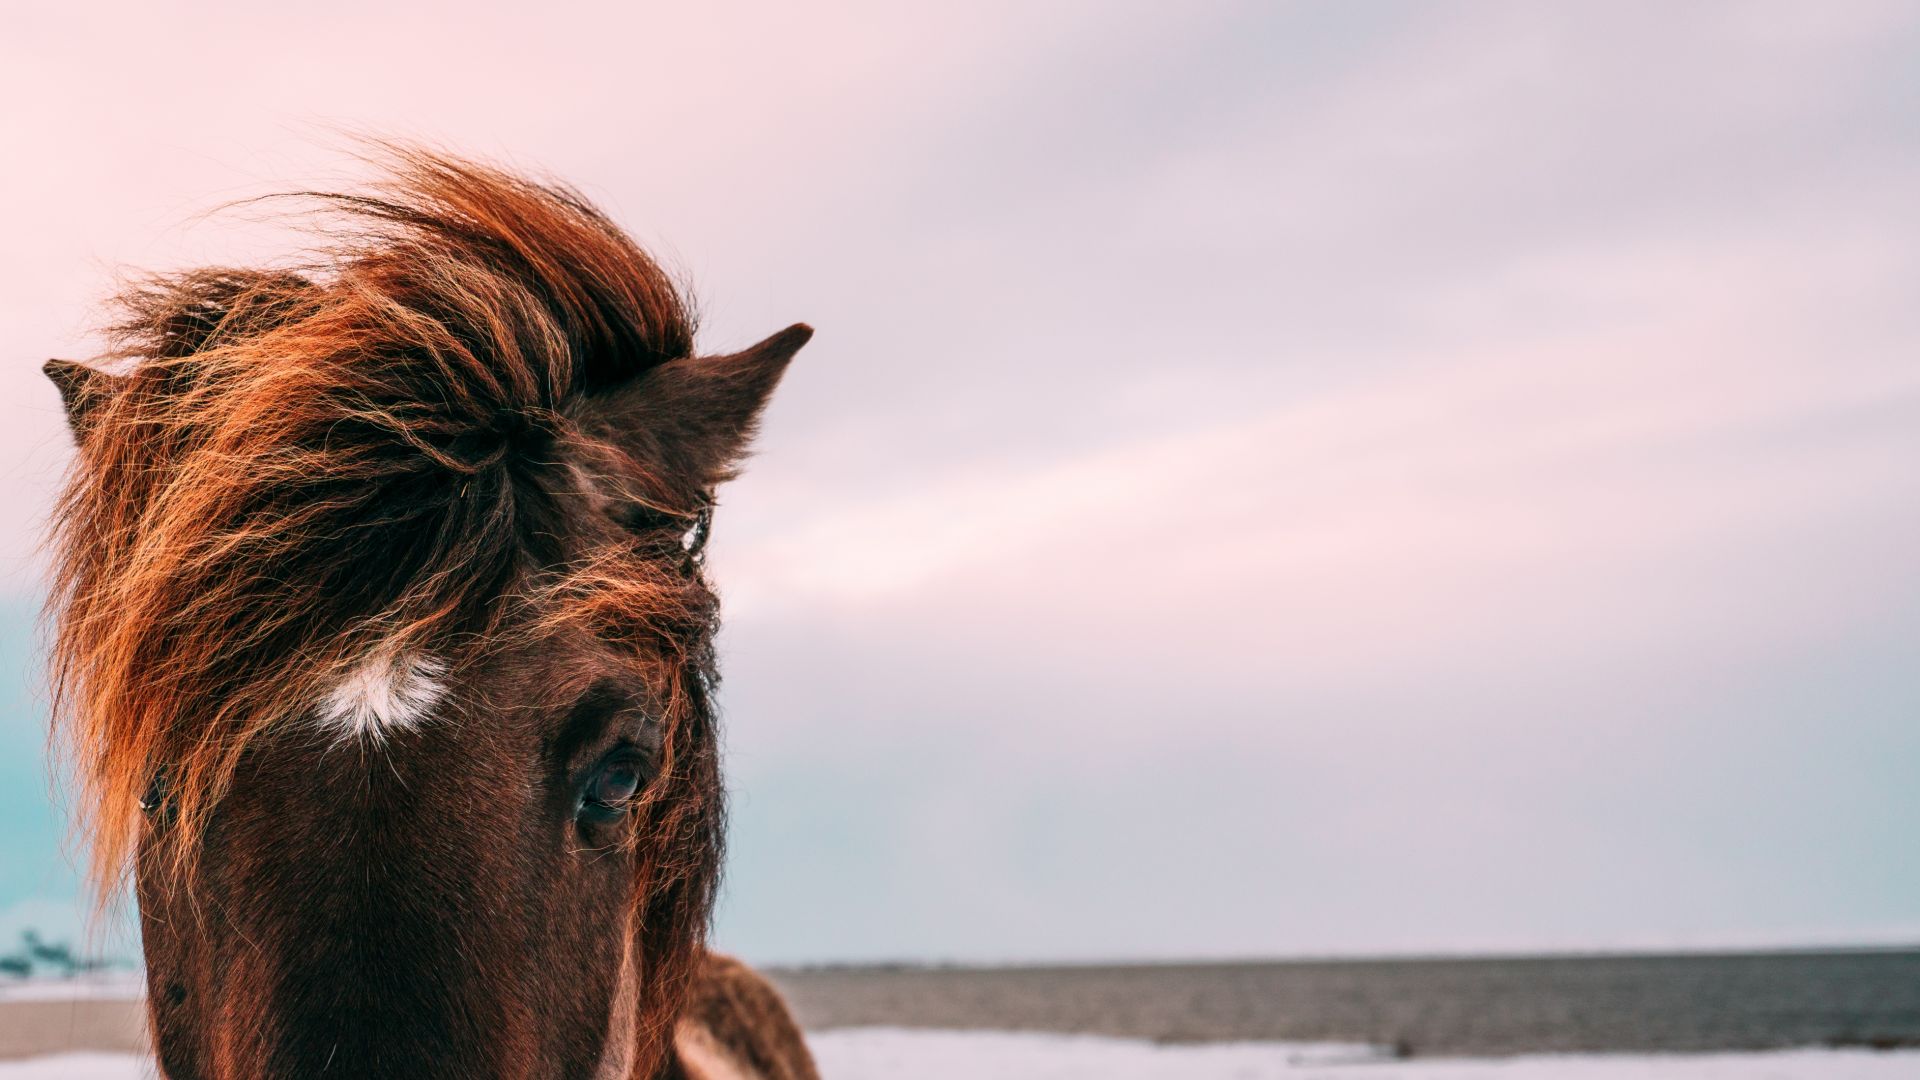 Wallpaper Horse muzzle, brown animal, beach